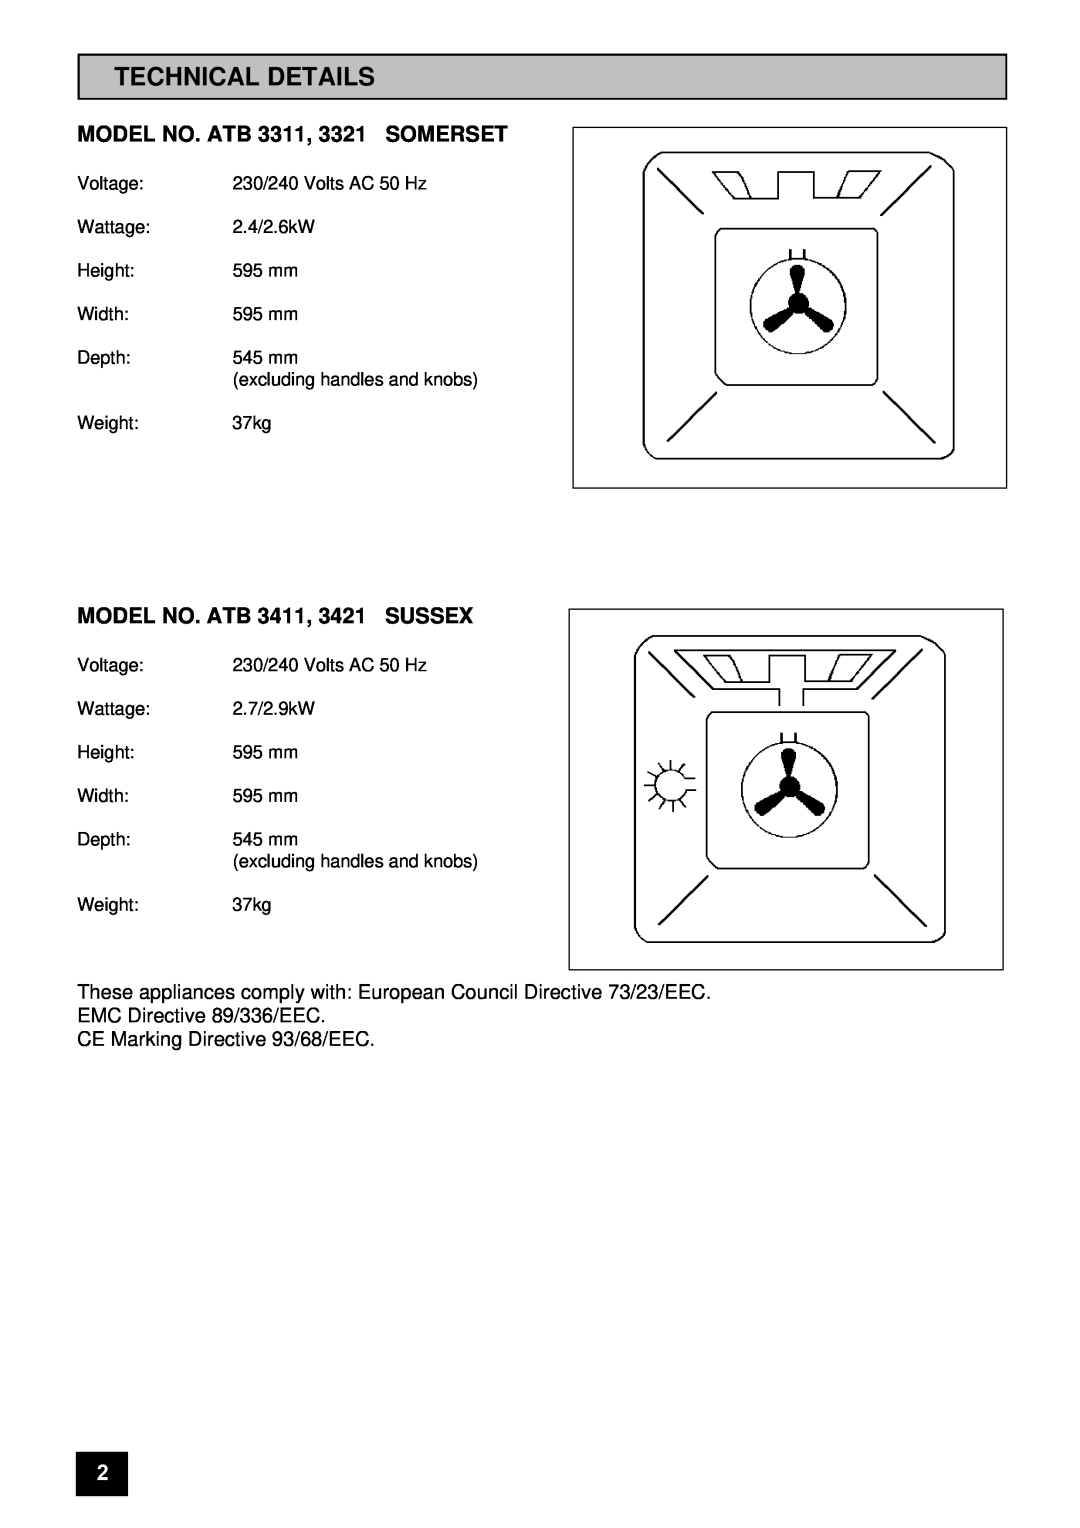 Tricity Bendix Technical Details, MODEL NO. ATB 3311, 3321 SOMERSET, MODEL NO. ATB 3411, 3421 SUSSEX 